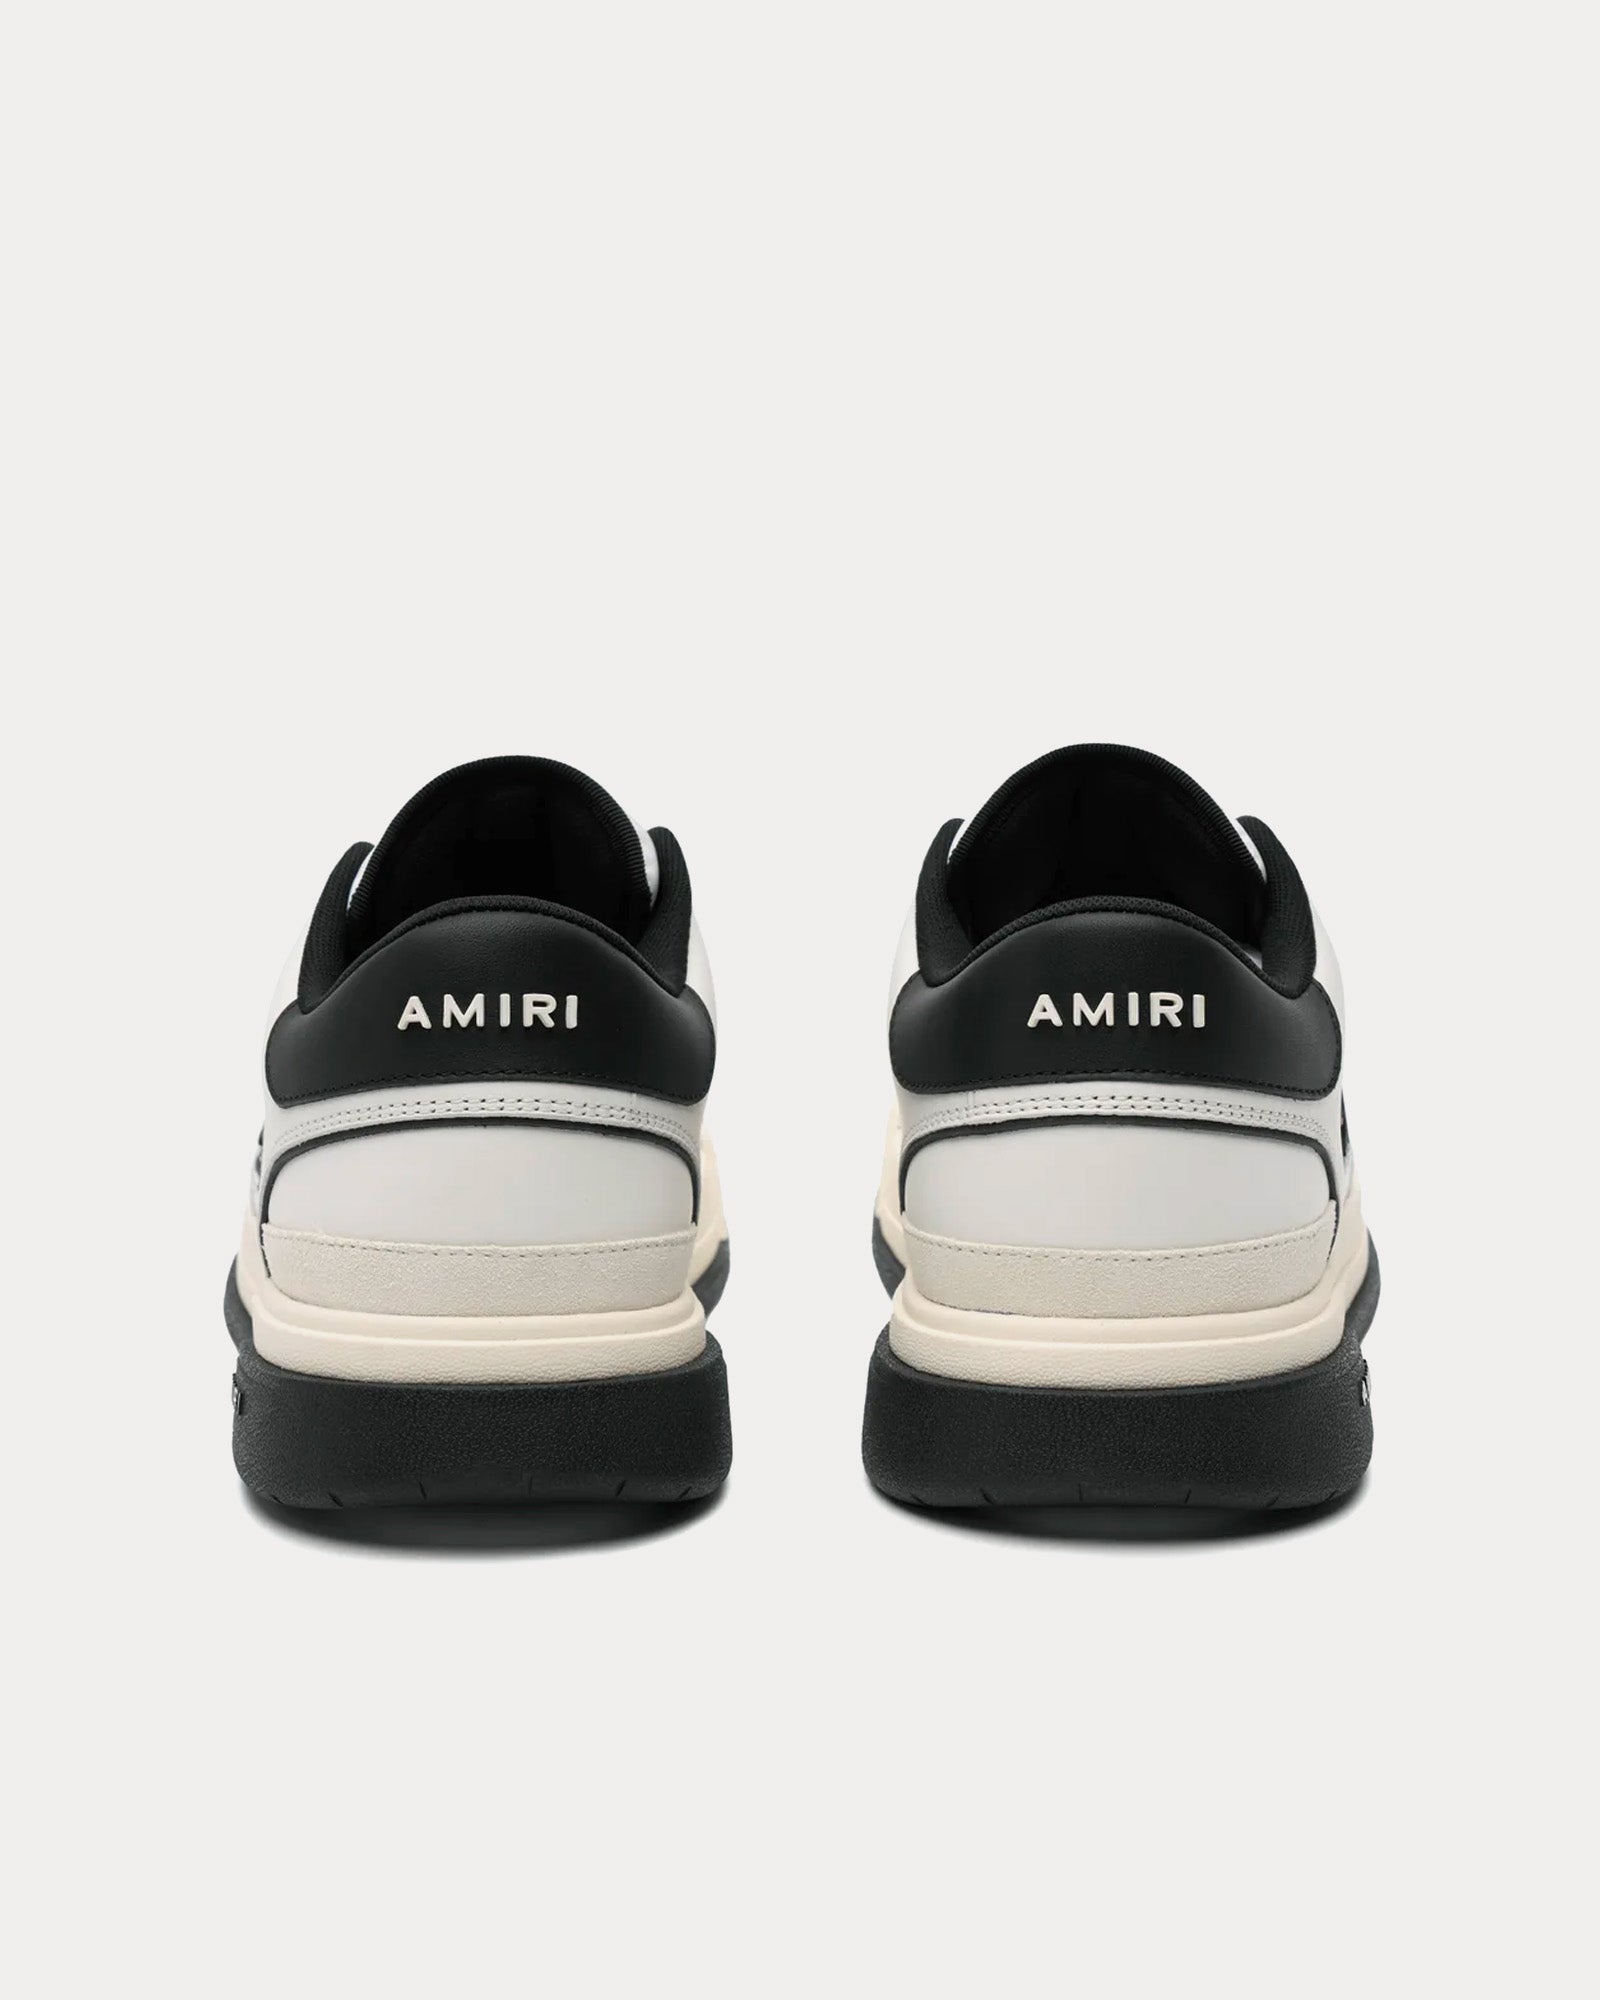 AMIRI - Classic White / Black Low Top Sneakers